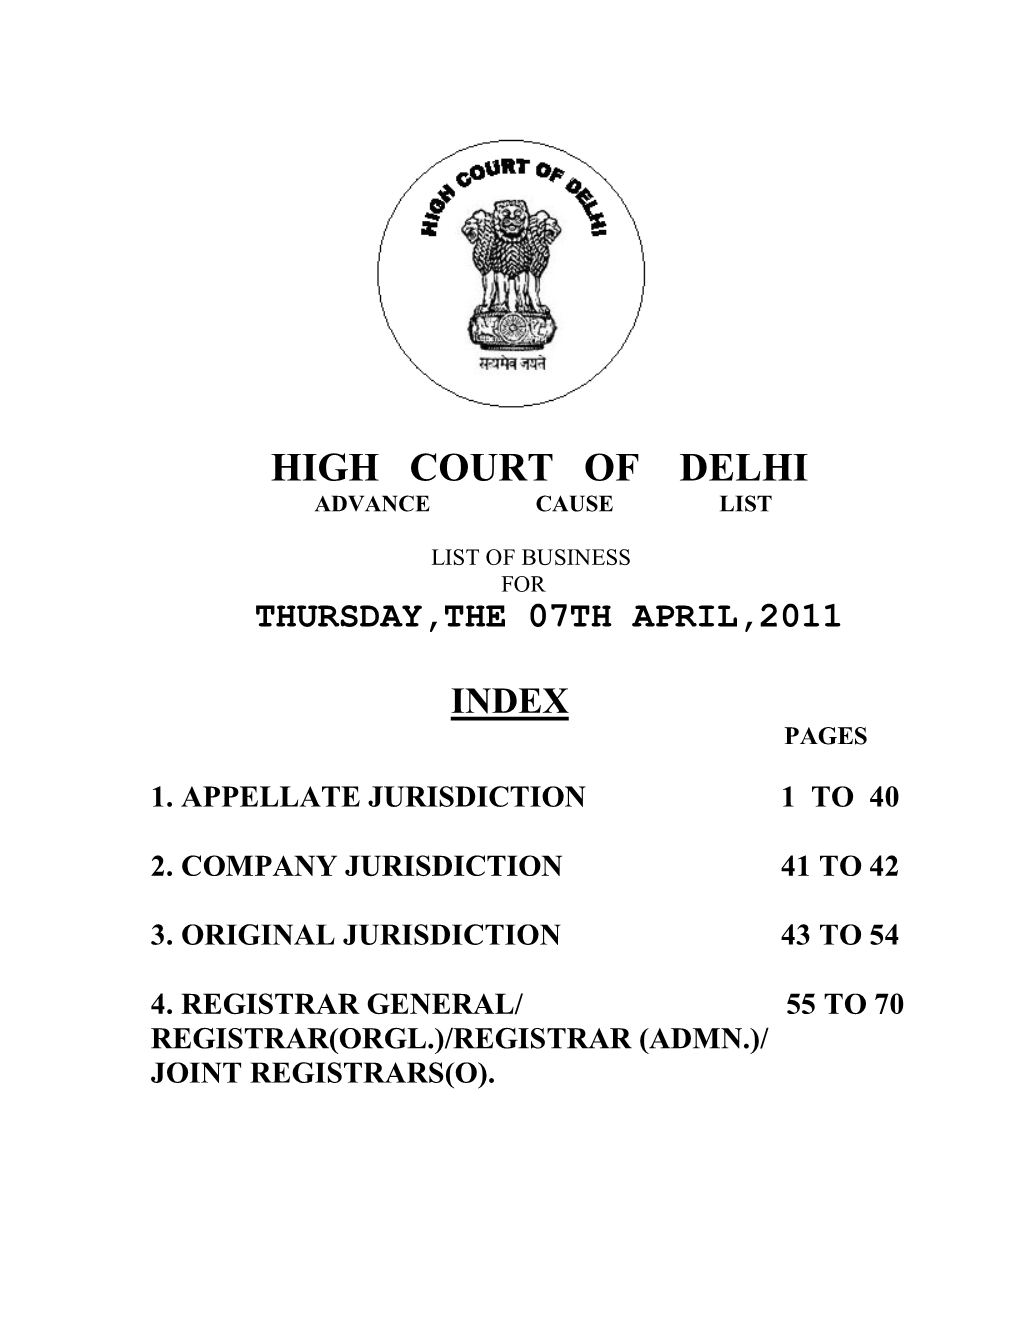 High Court of Delhi Advance Cause List